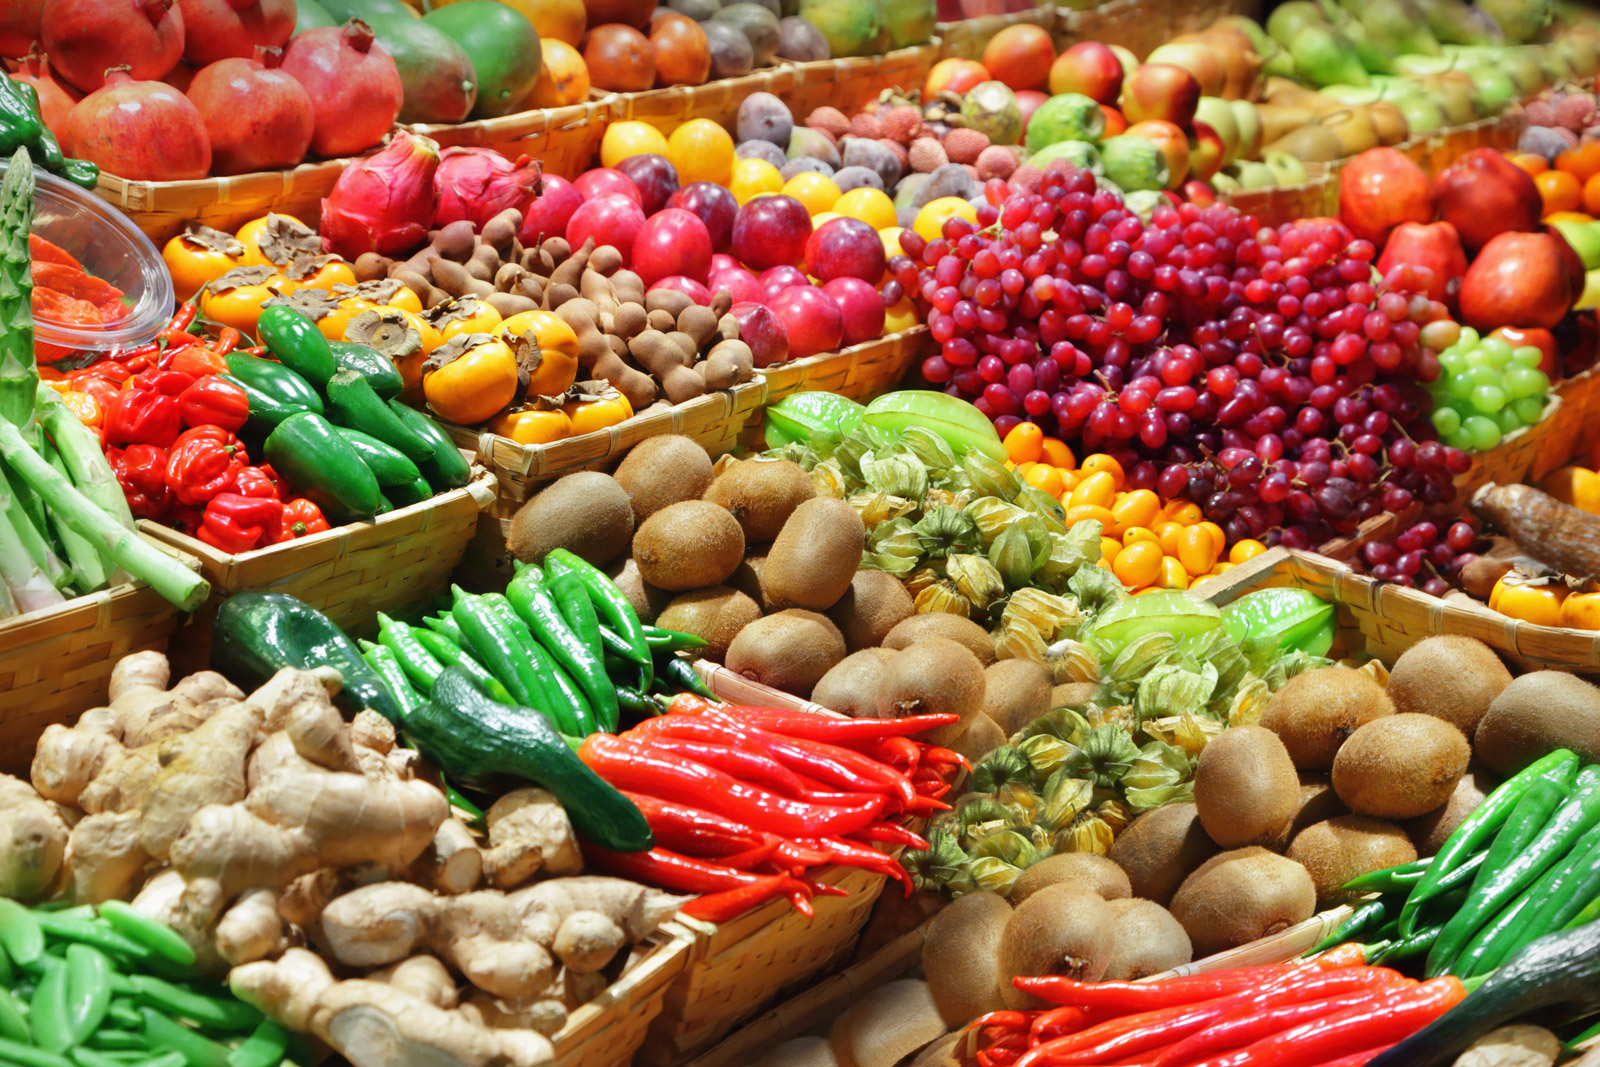 Photo of produce at a farmer's market